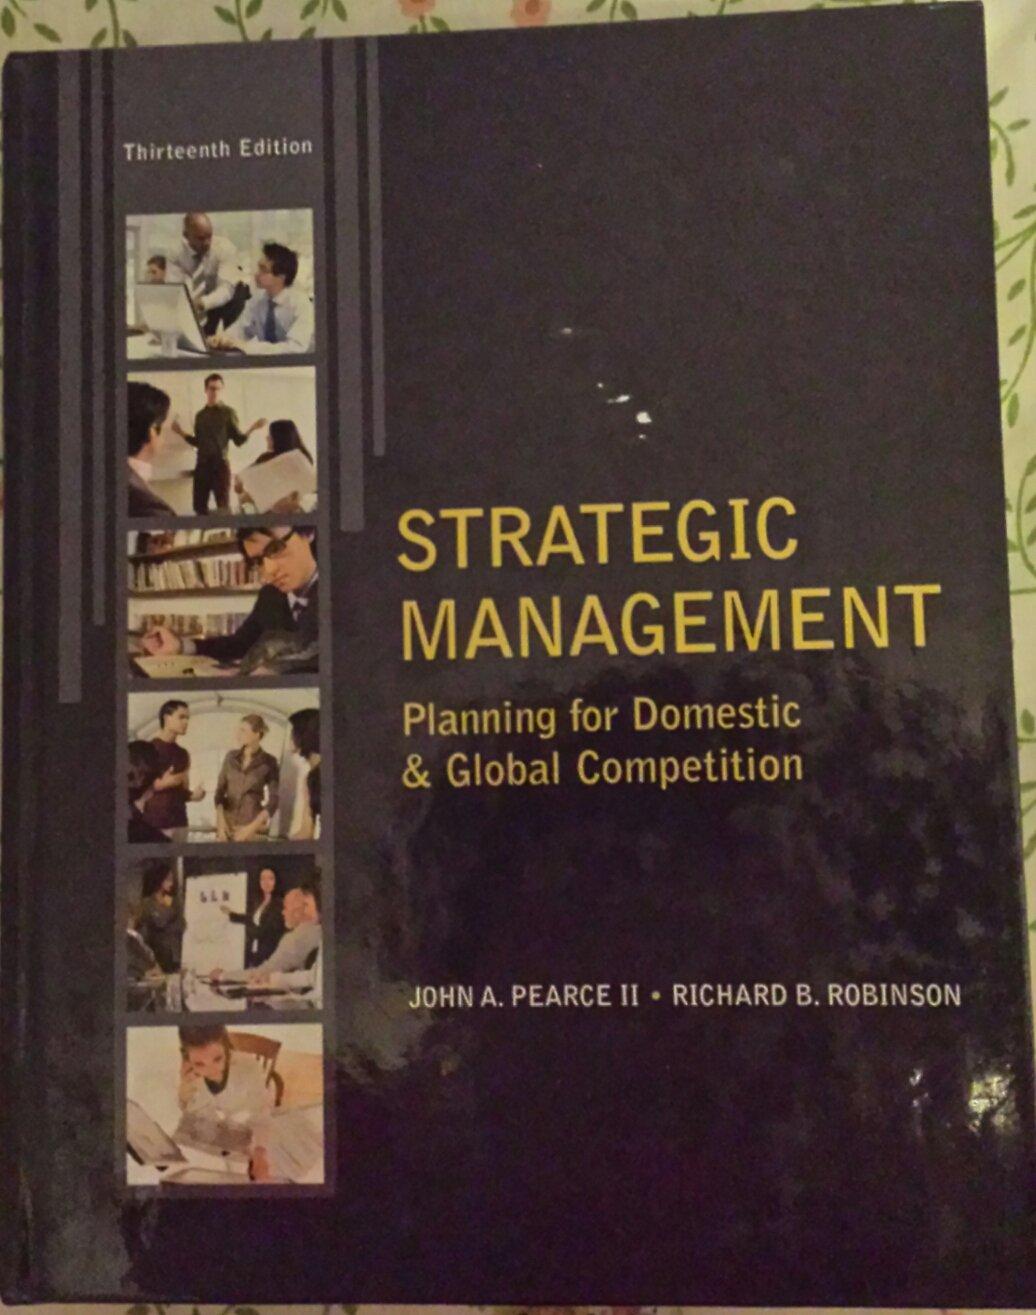 strategic management 13th edition john pearce , richard robinson 0078029295, 978-0078029295